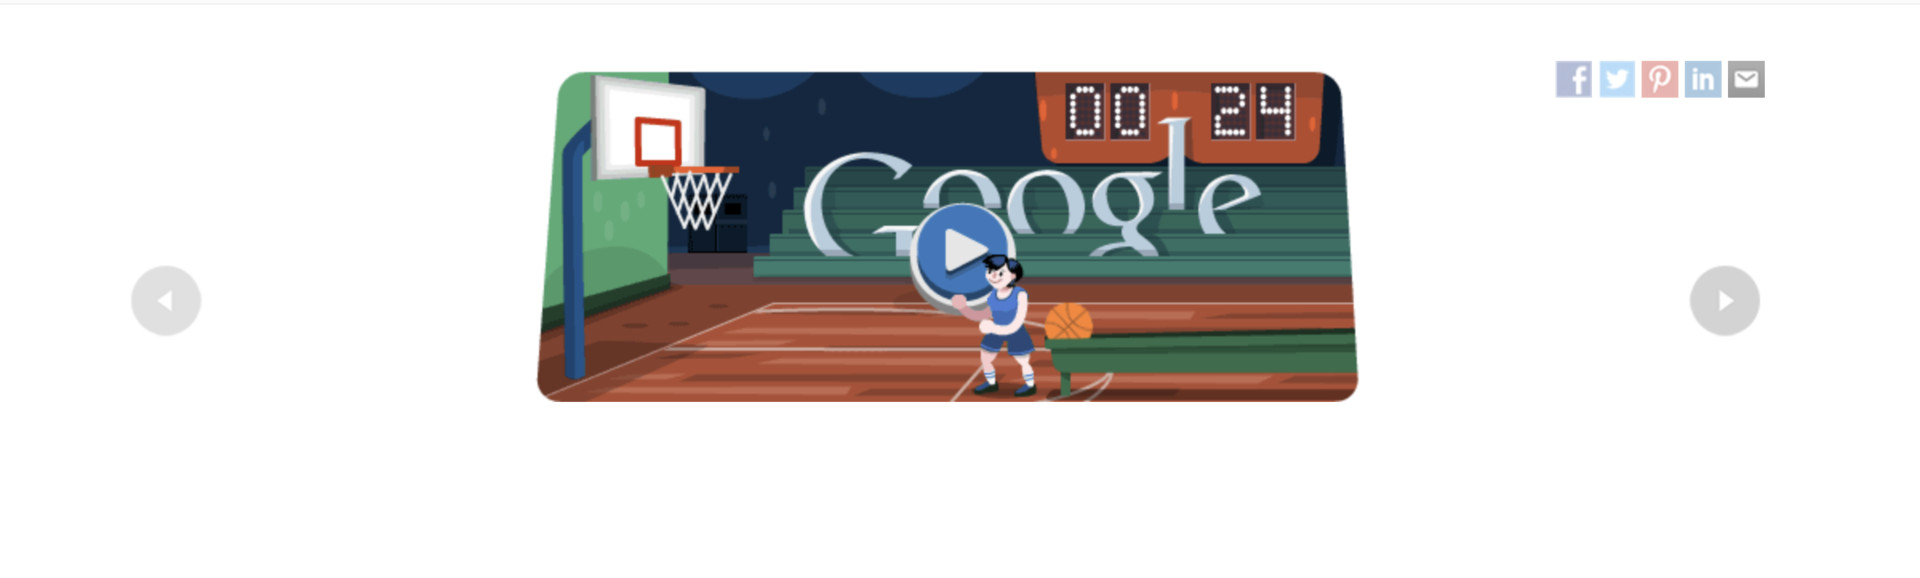 google doodle basketball